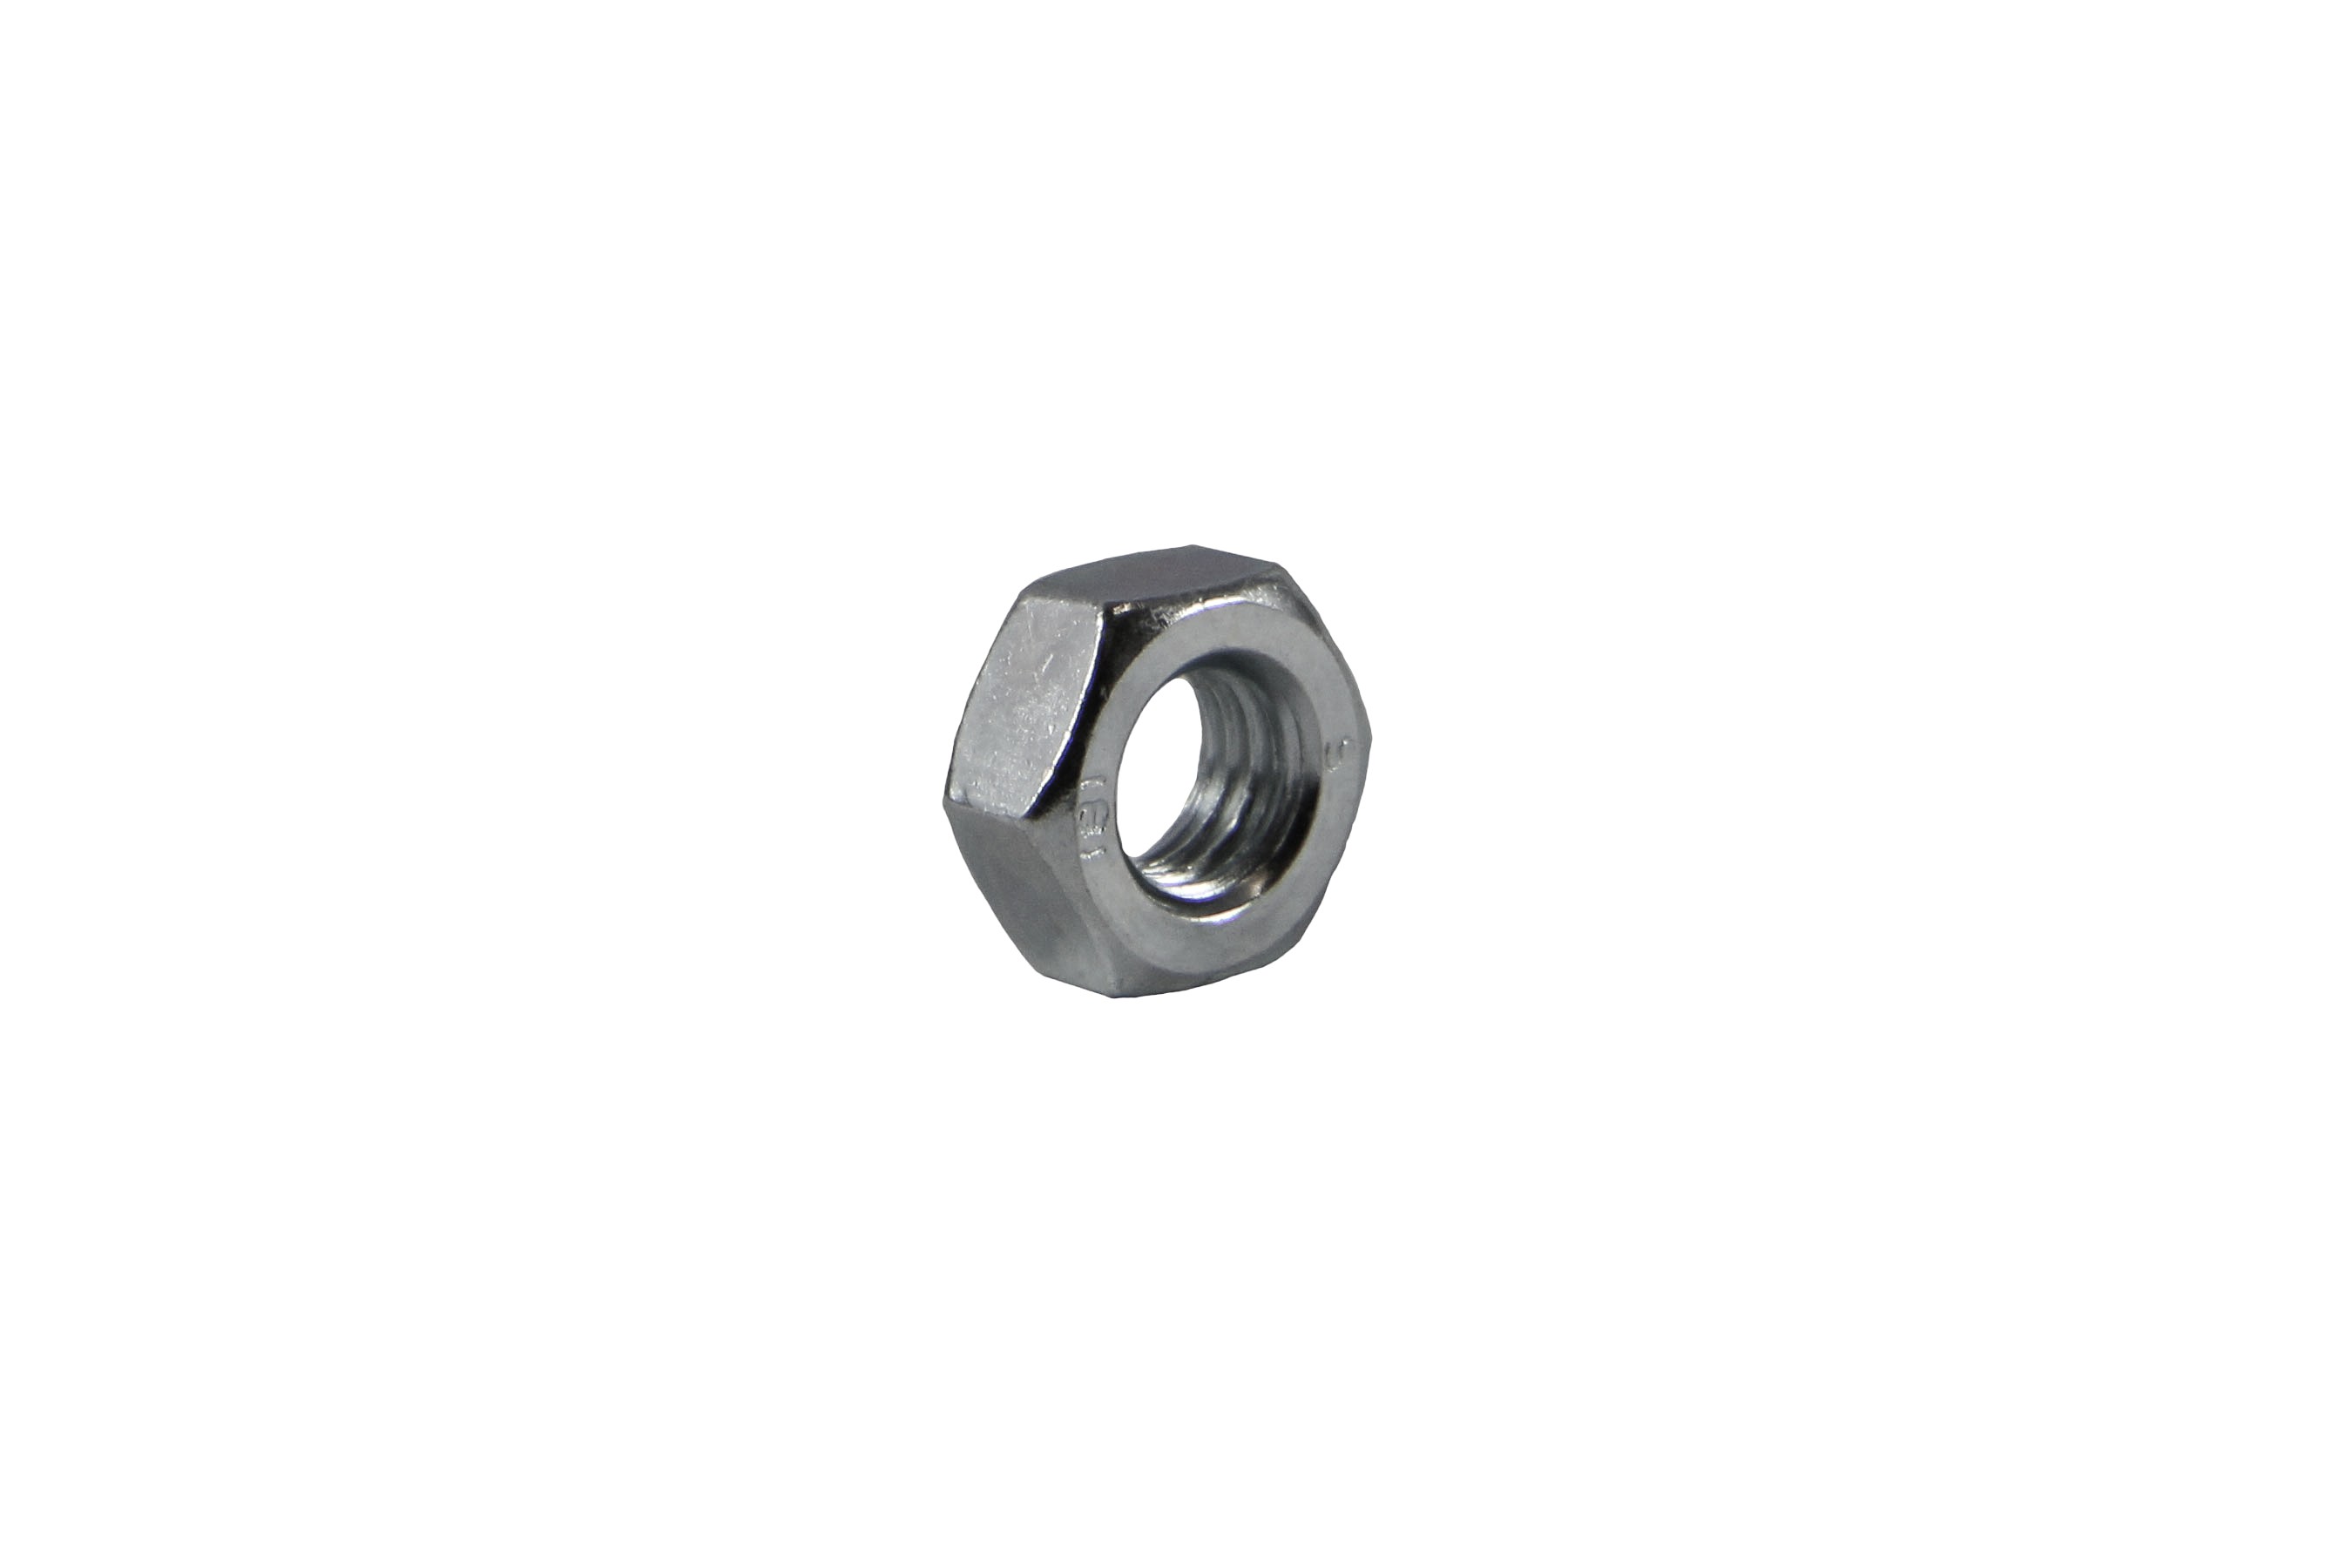 Hexagon nut M10